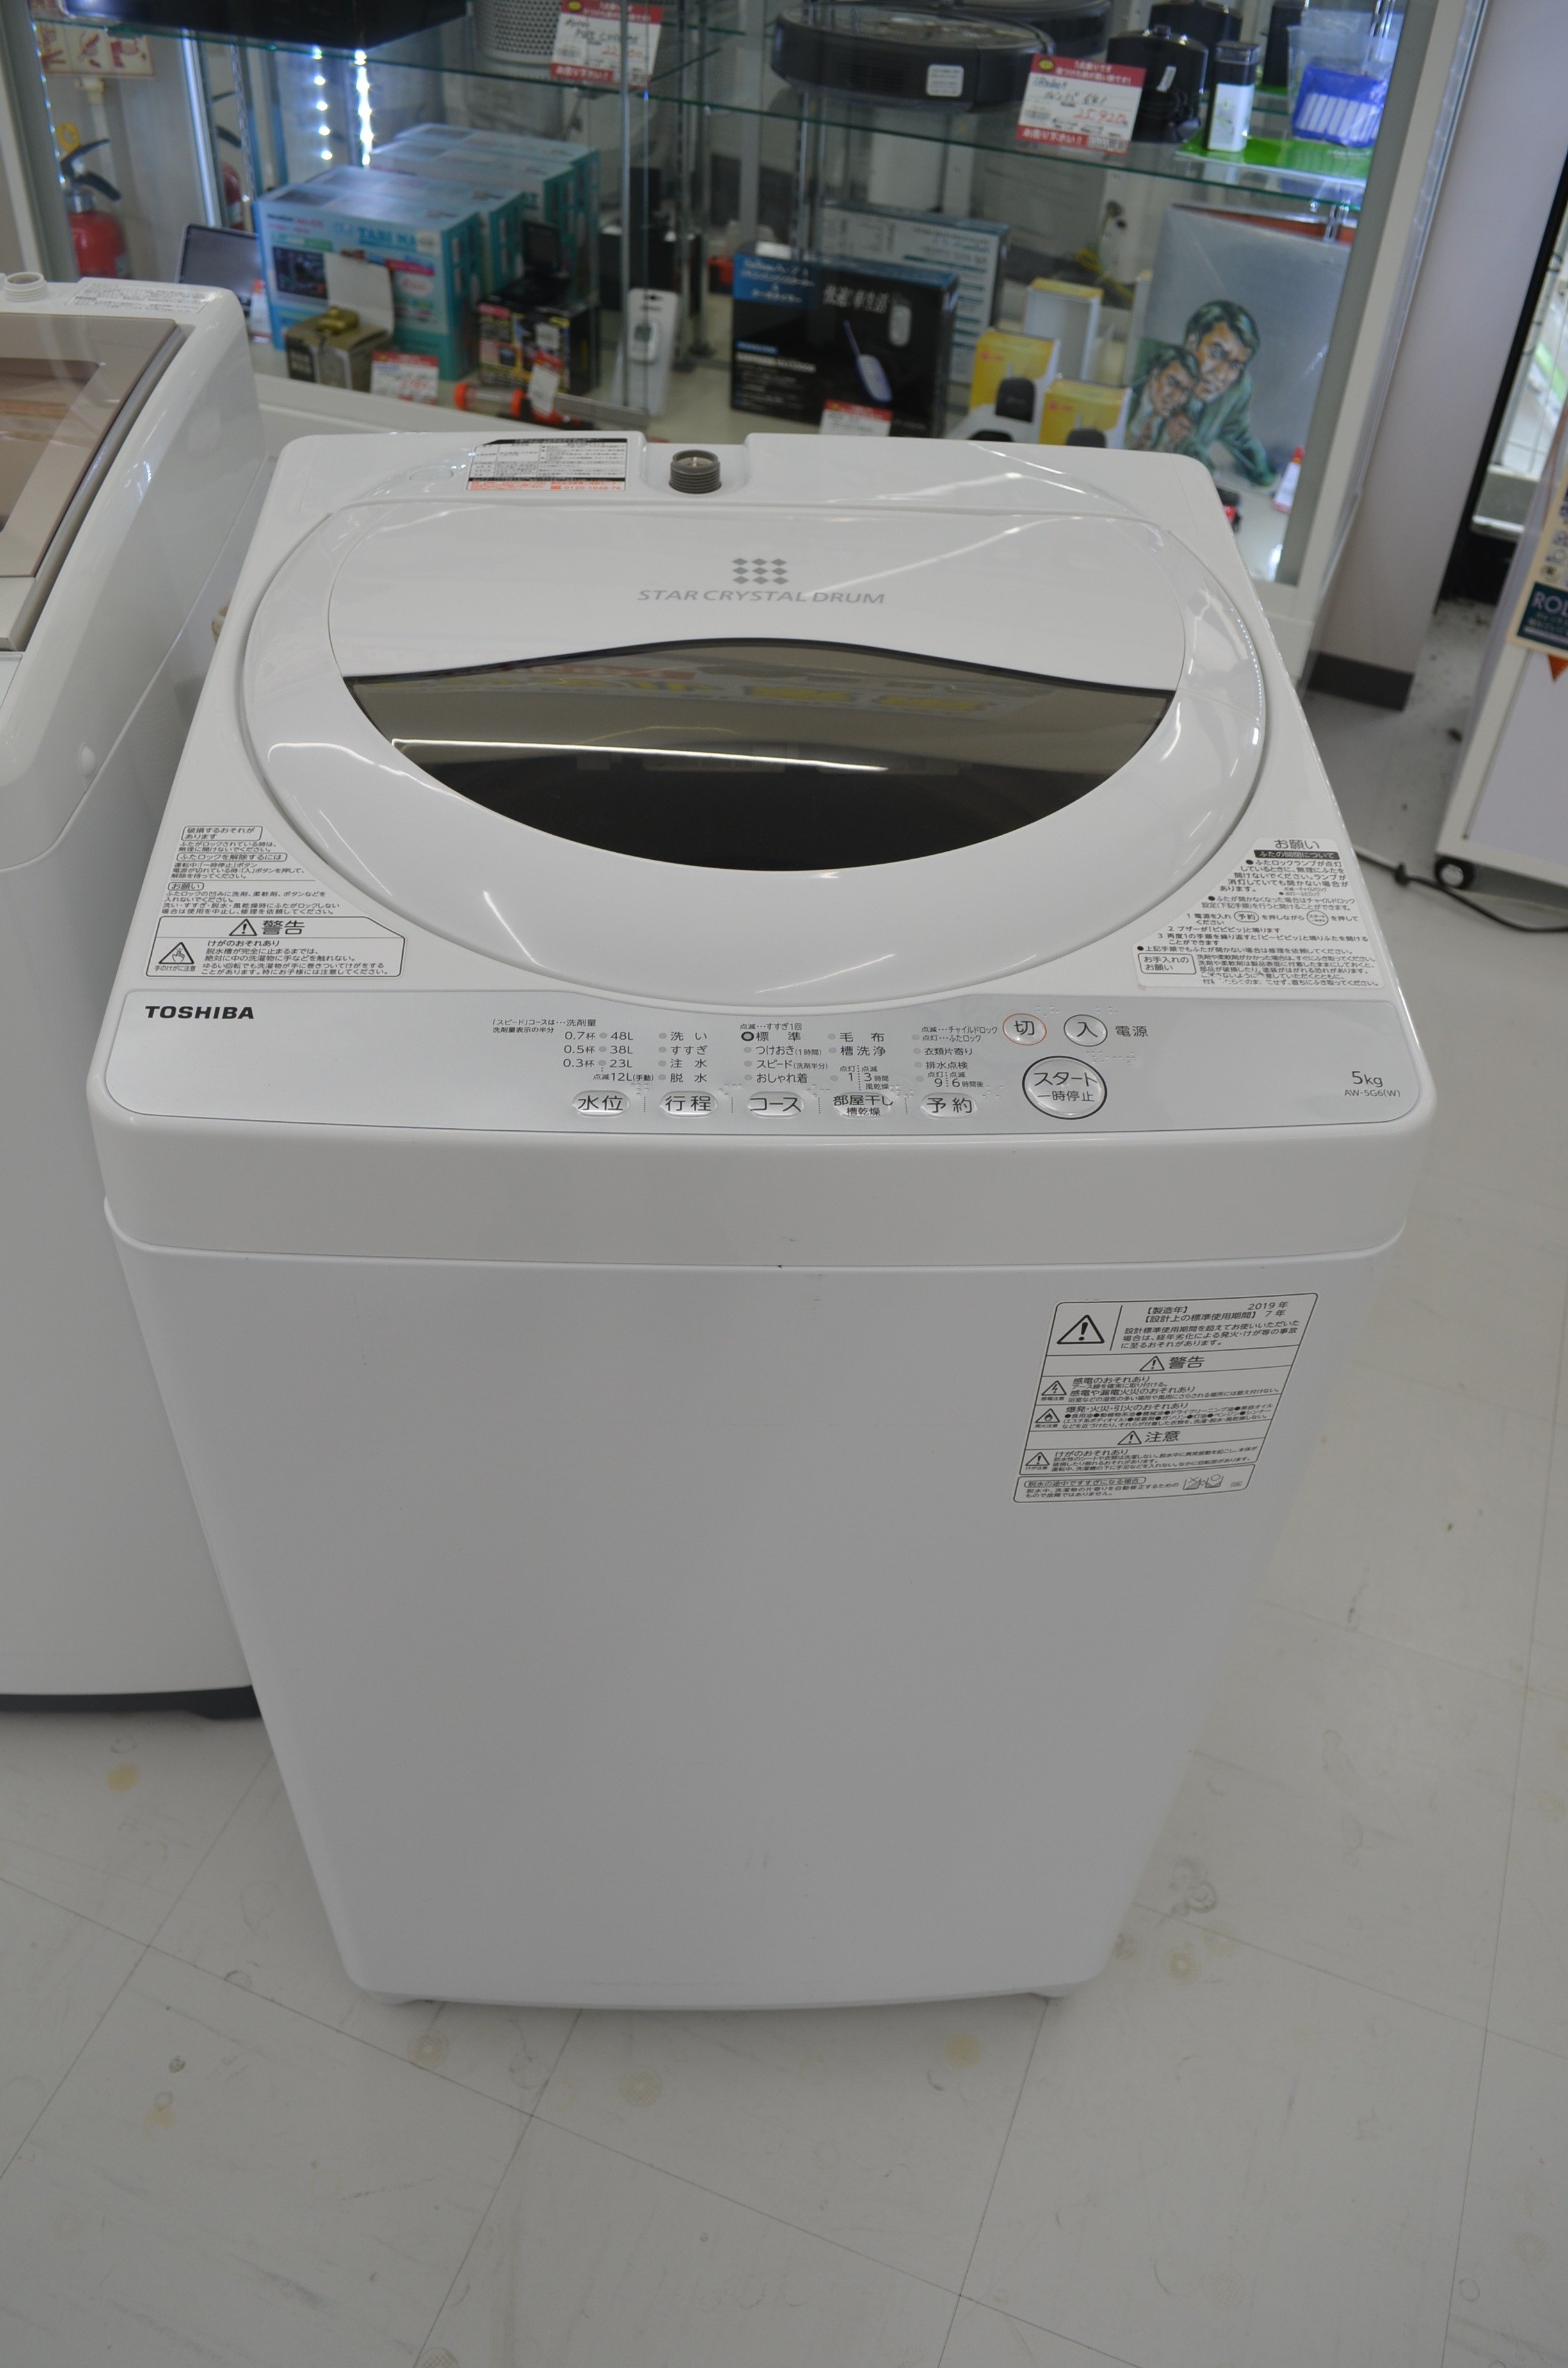 TOSHIBA 洗濯機 スタークリスタルドラム 買取いたしました!! | 洗濯機 